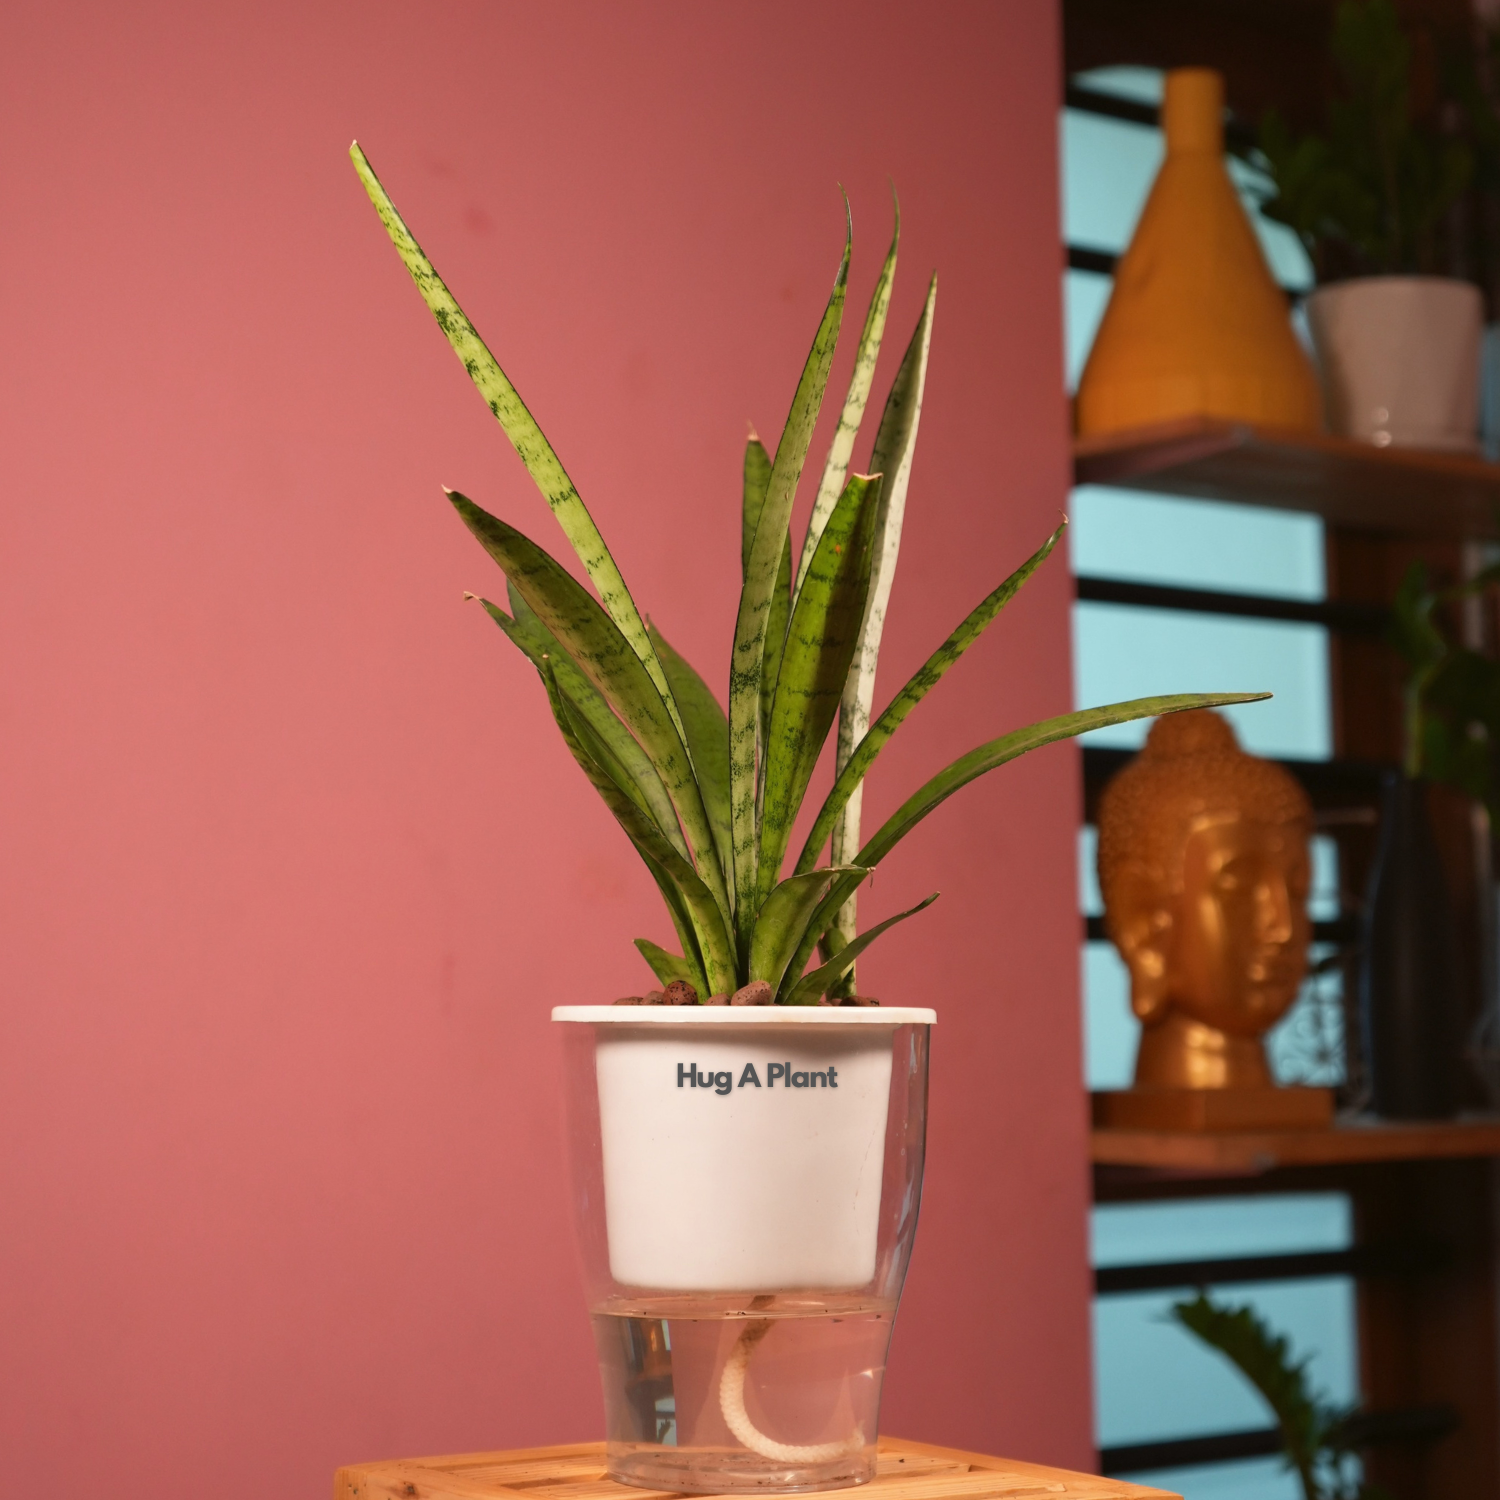 Sansevieria Silver Princess / Snake Plant (Sansevieria trifasciata)- Live Plant (With 5 Inch Self-Watering Pot & Plant)